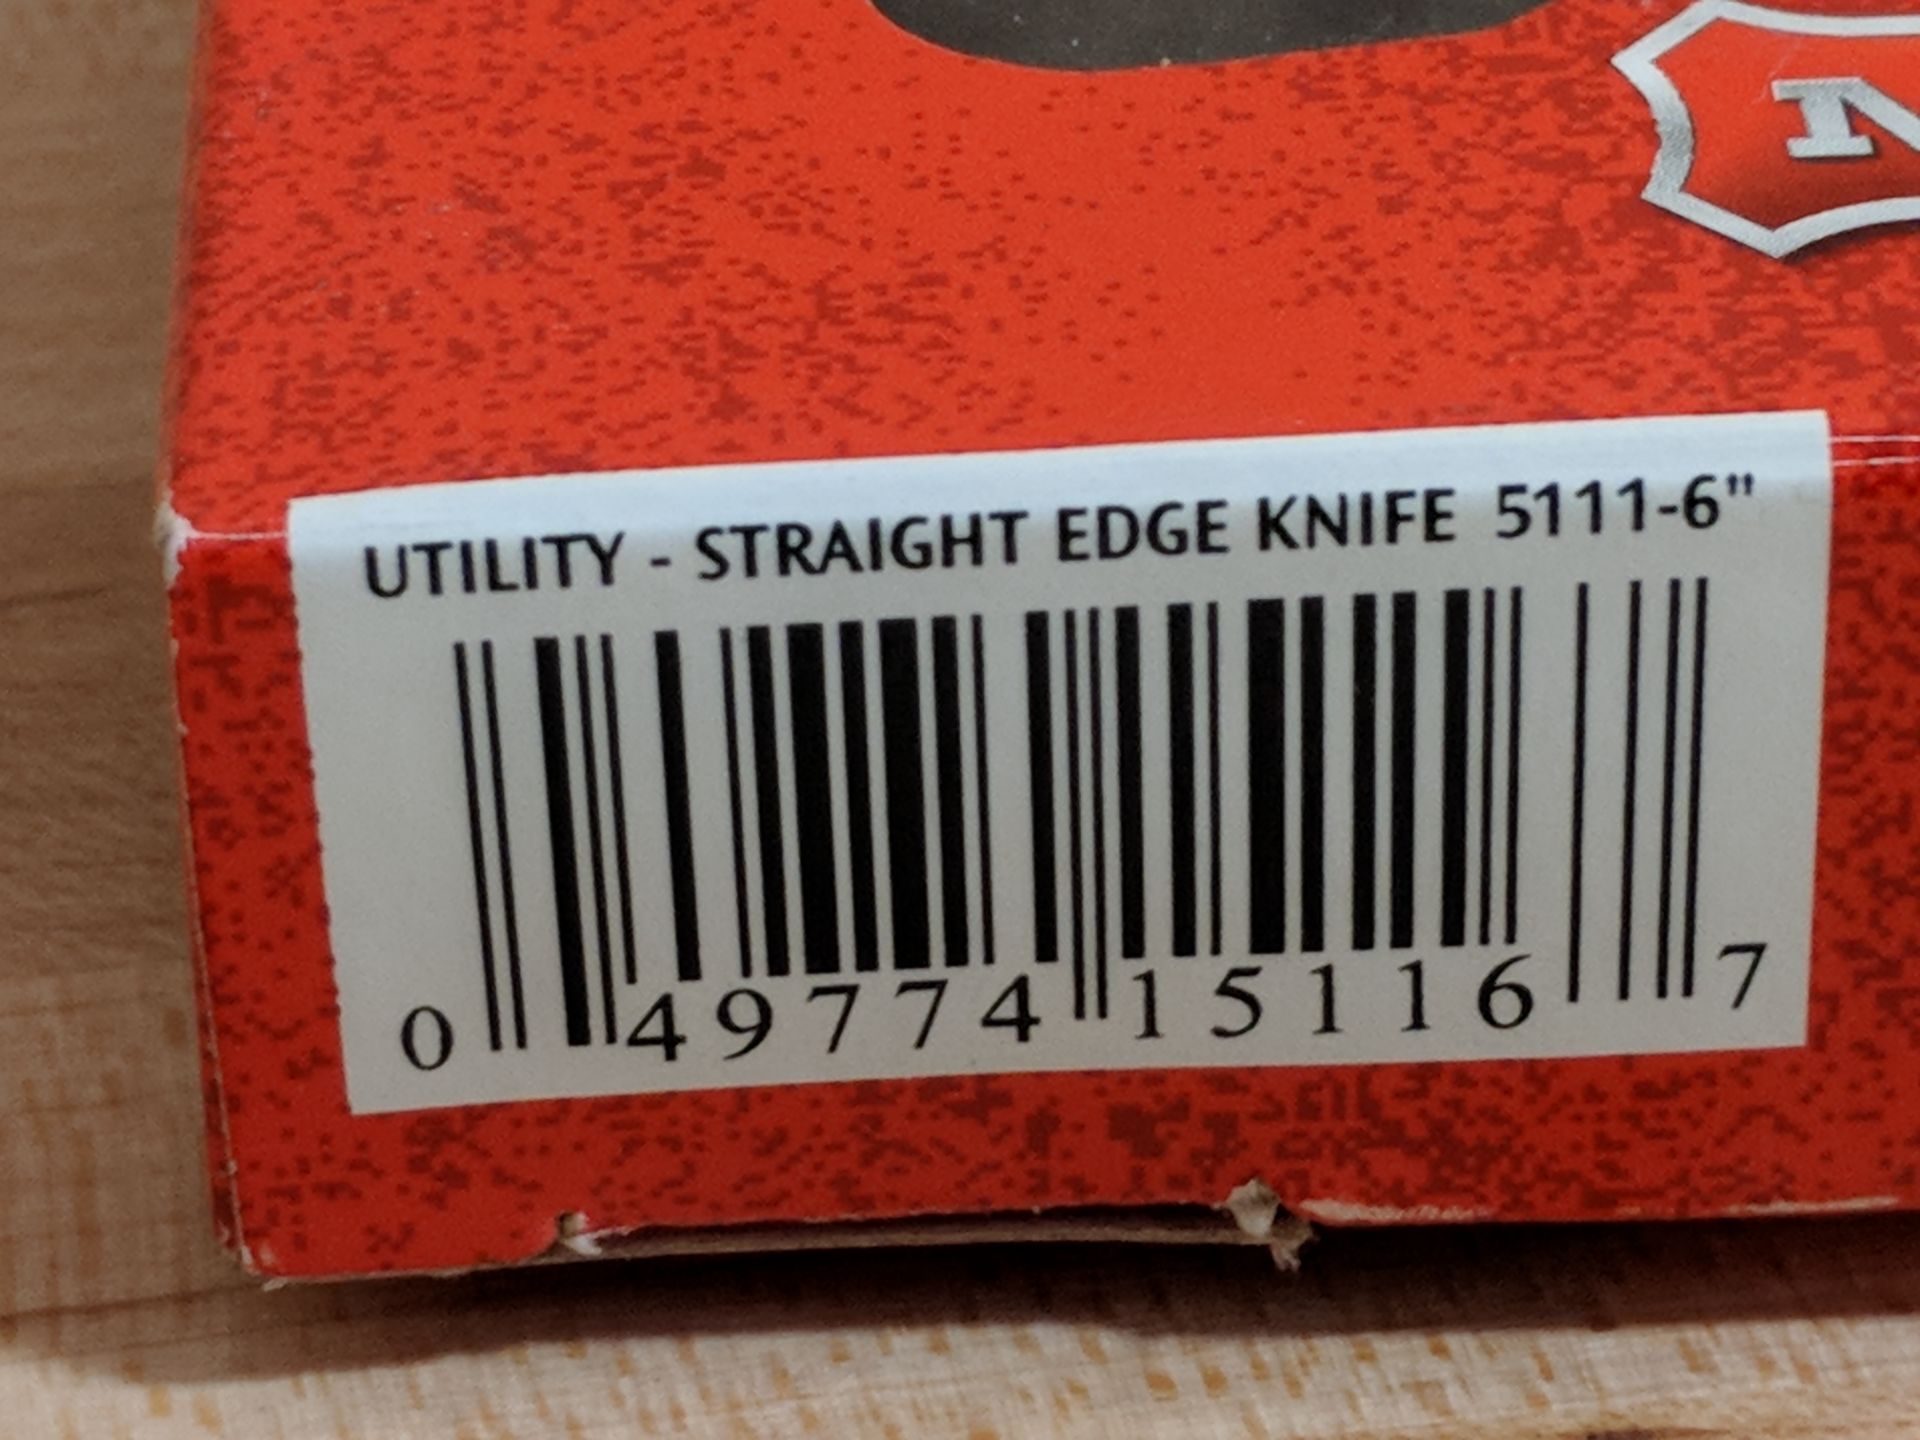 Mundial 6" Utility Straight Edge Knife, 5111-6" Black - Image 3 of 3